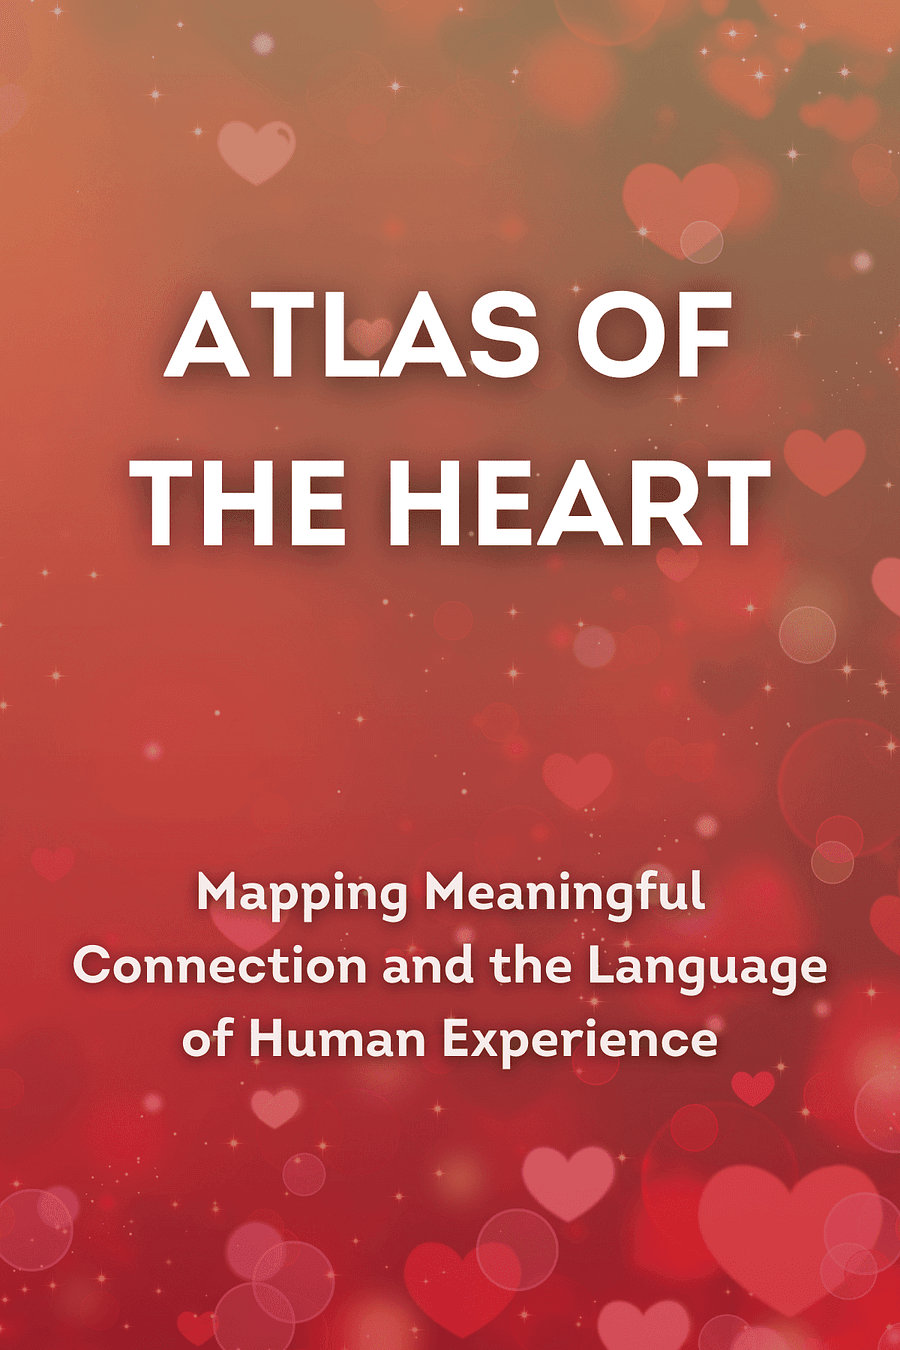 Atlas of the Heart by Brené Brown - Book Summary